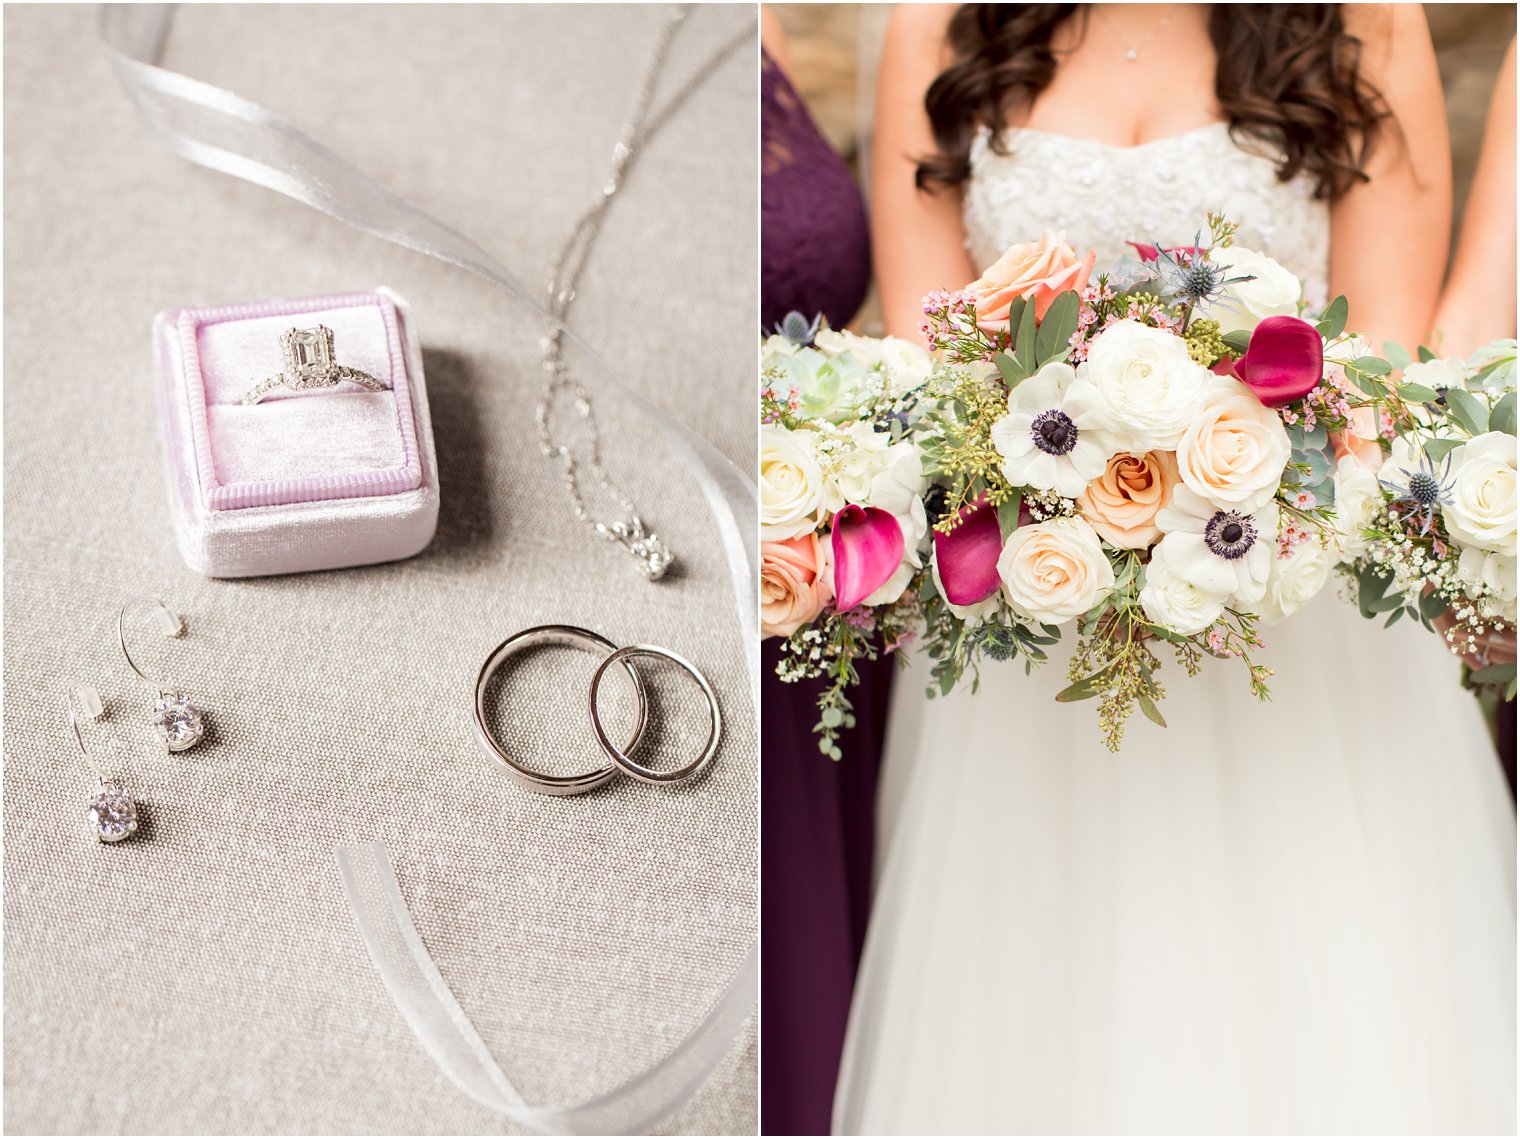 Bride's ring in purple Mrs. Box